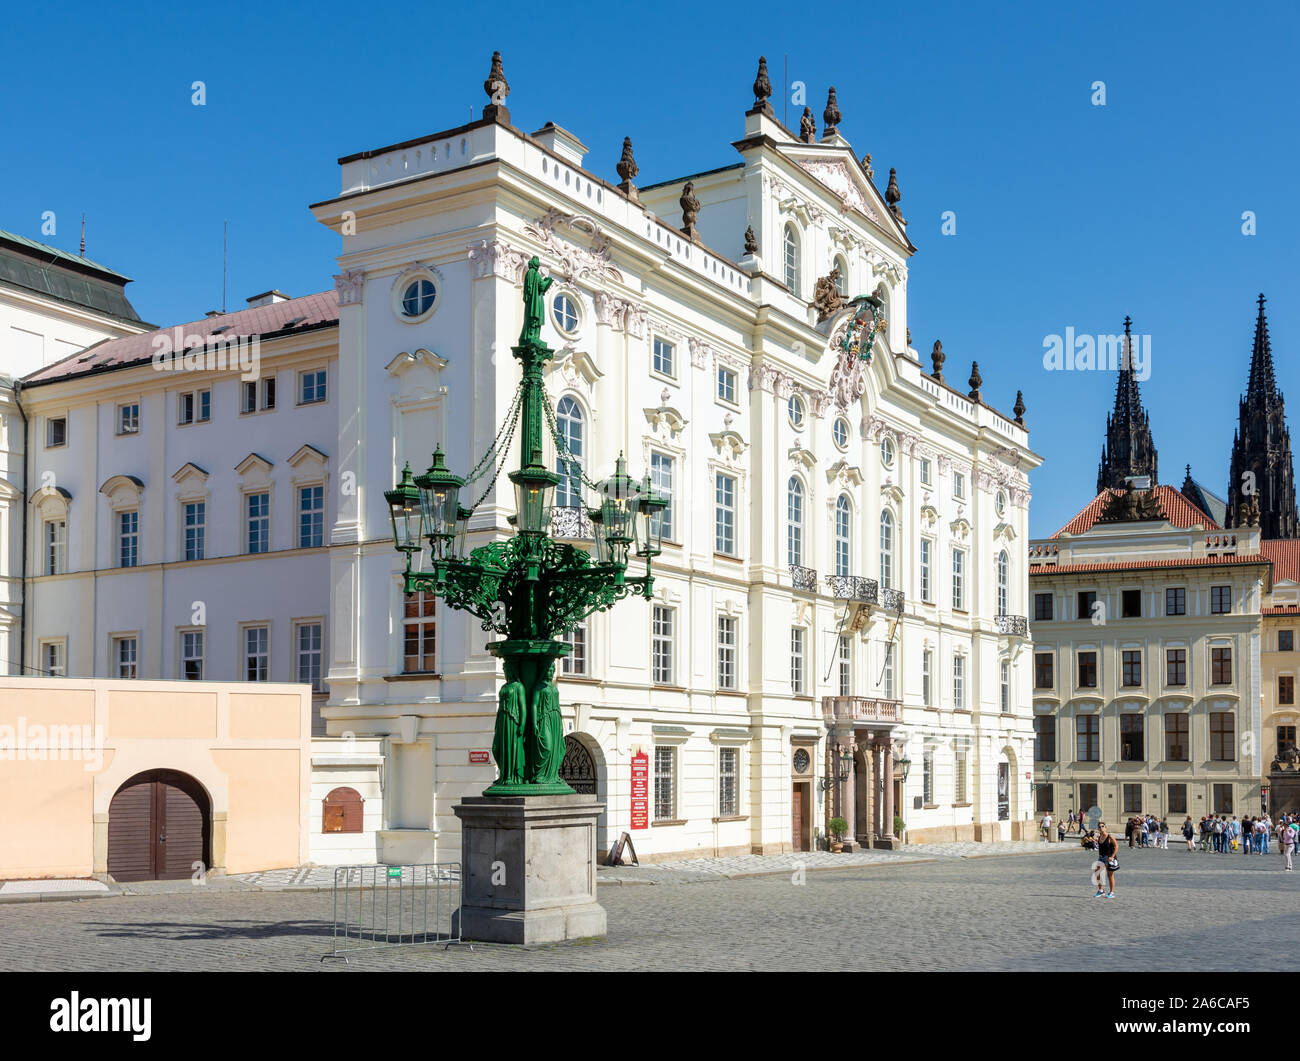 PRAGUE, CZECH REPUBLIC - SEPTEMBER 5: Tourists at the historic Hradcany square in Prague, Czech Republic on September 5, 2019. Stock Photo